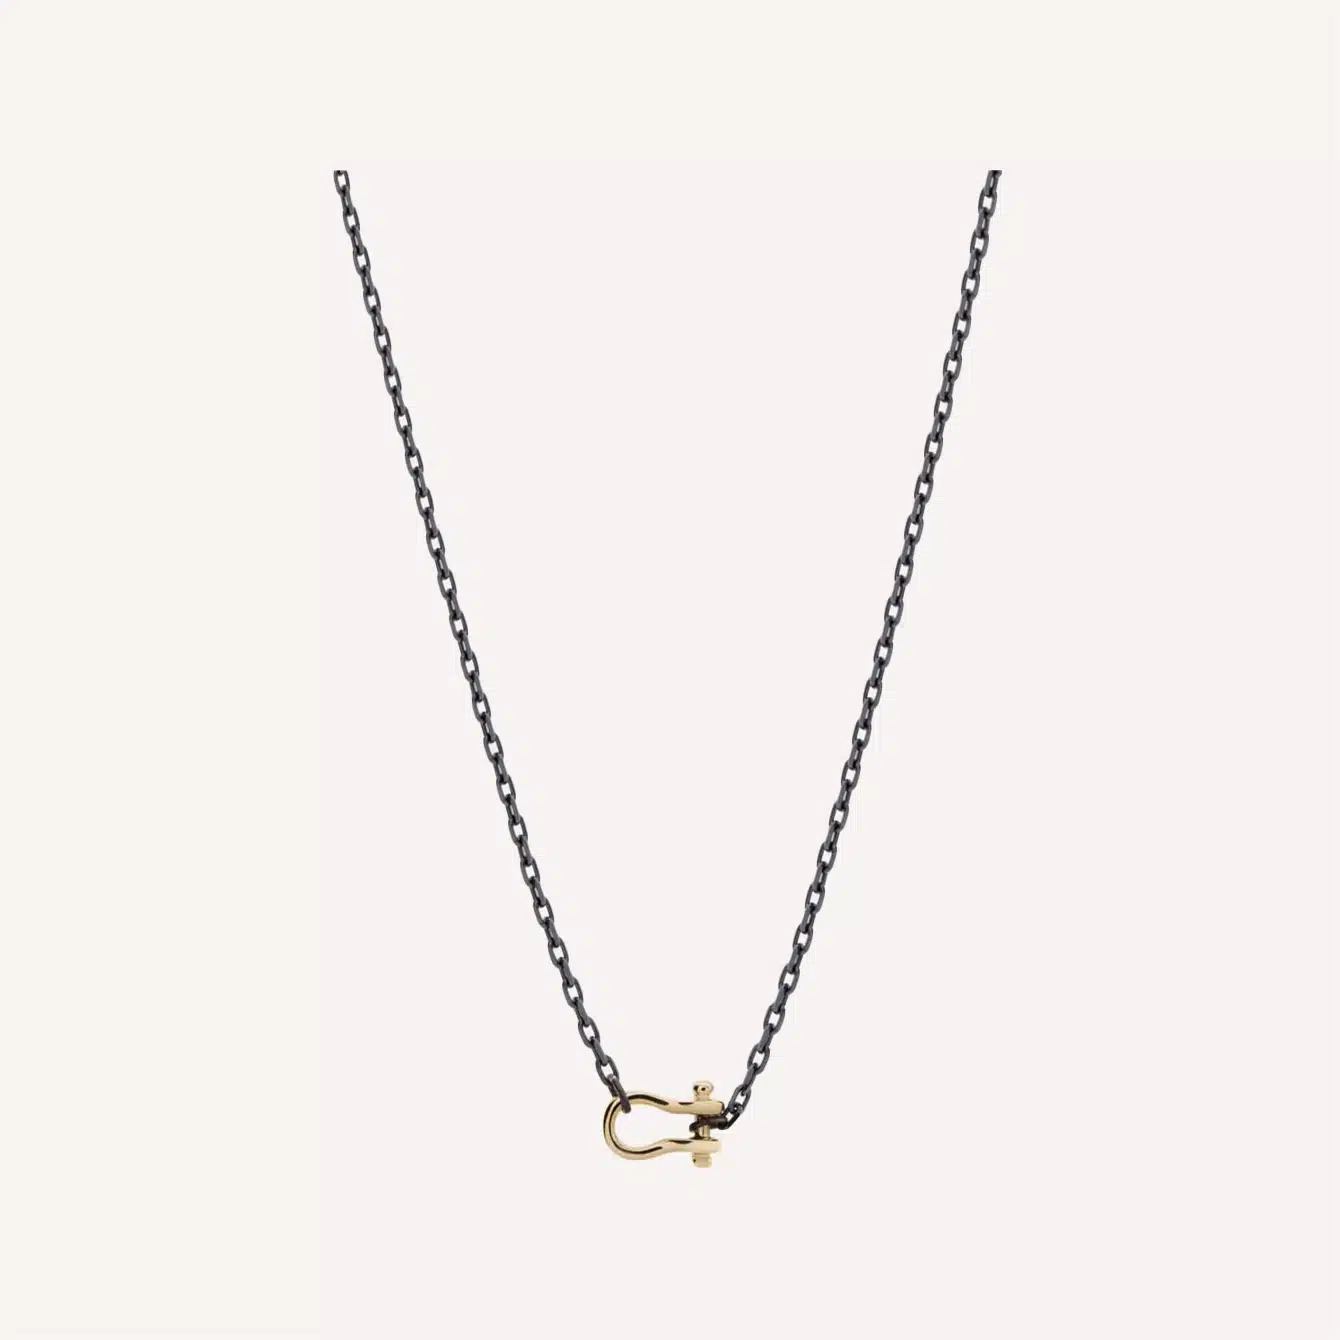 Miansai 1.7mm Cable Chain Necklace